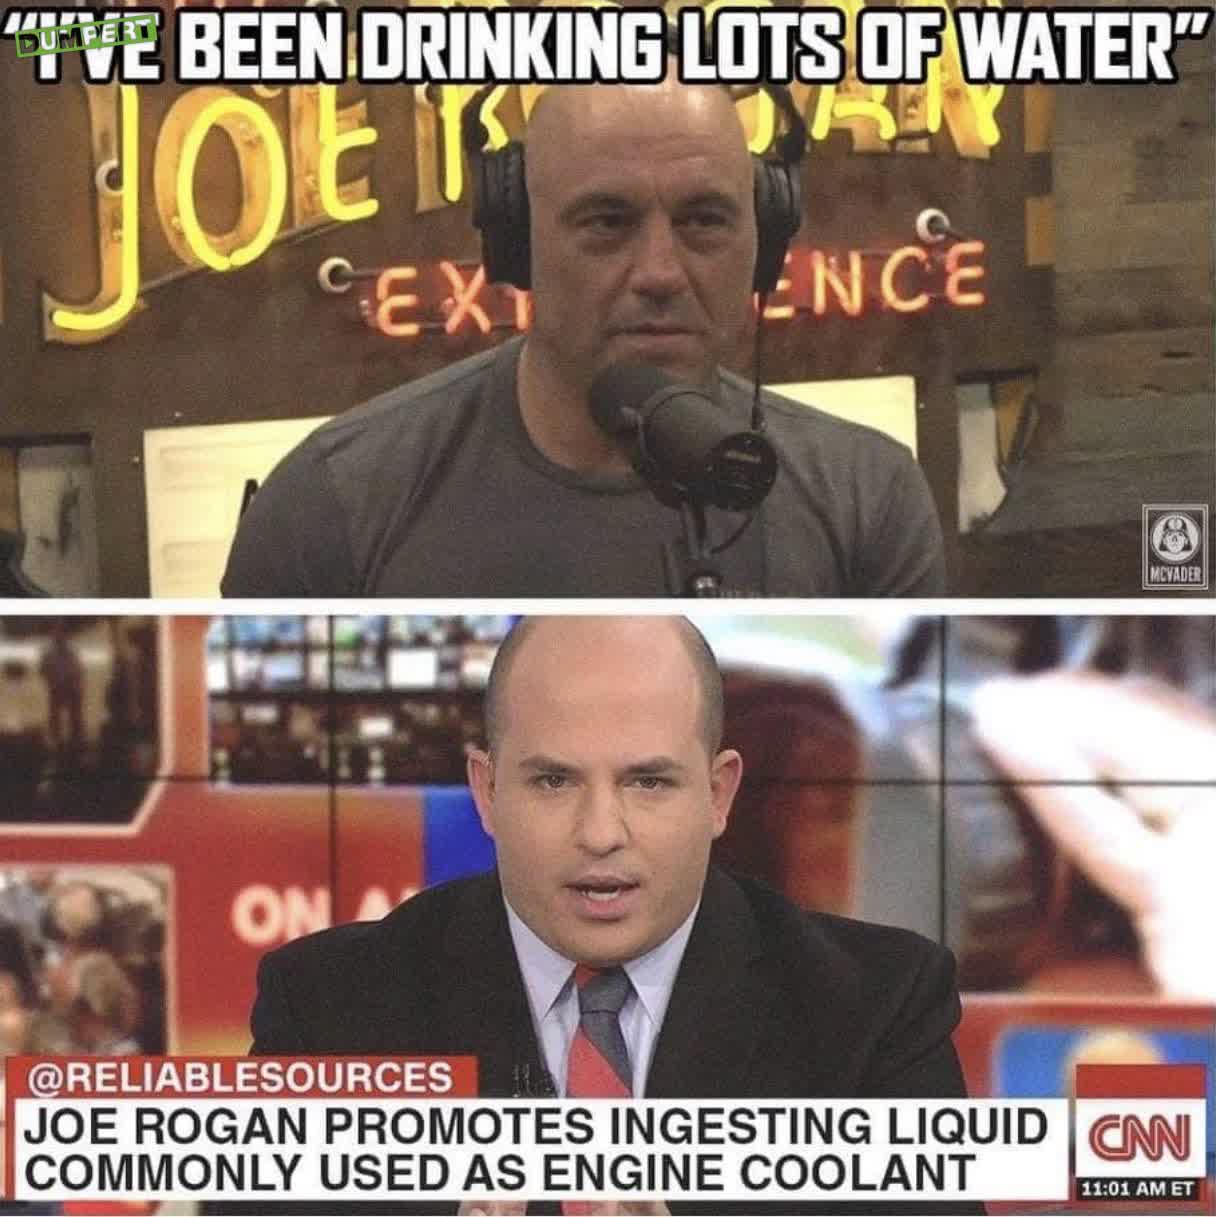 Joe Rogan vs interpretatie CNN